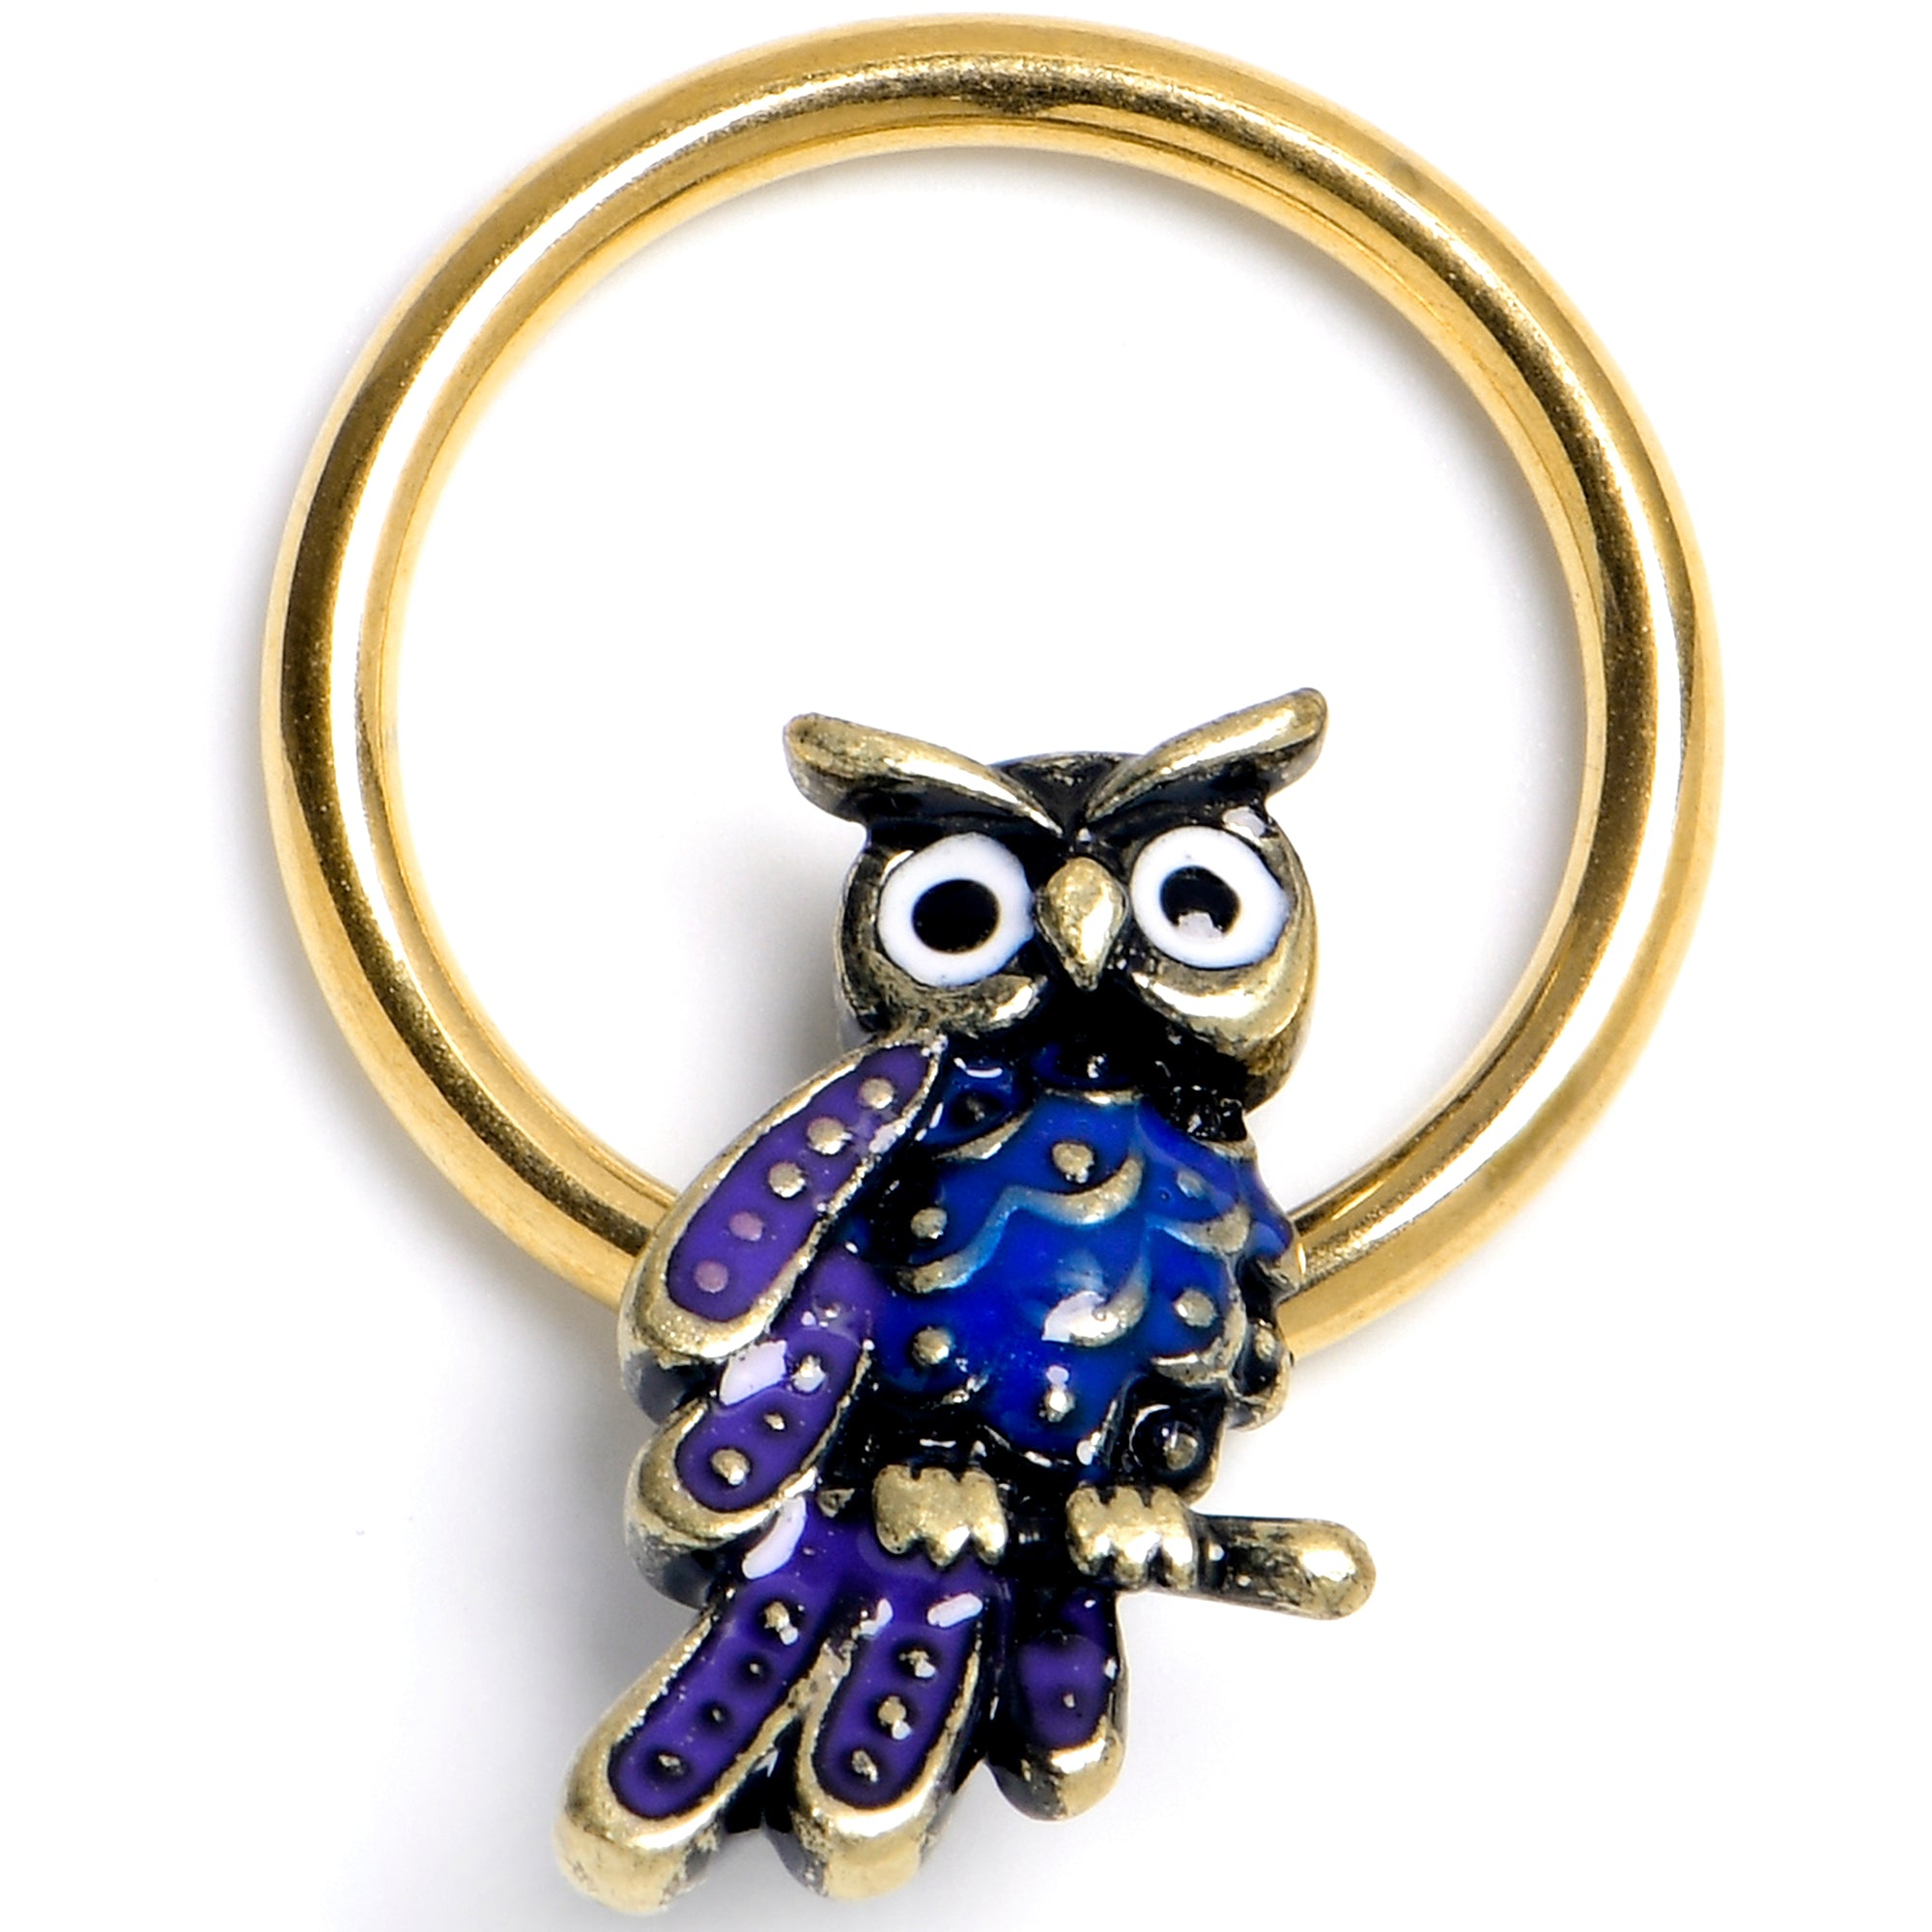 16 Gauge 3/8 Gold Tone Regal Owl BCR Captive Ring